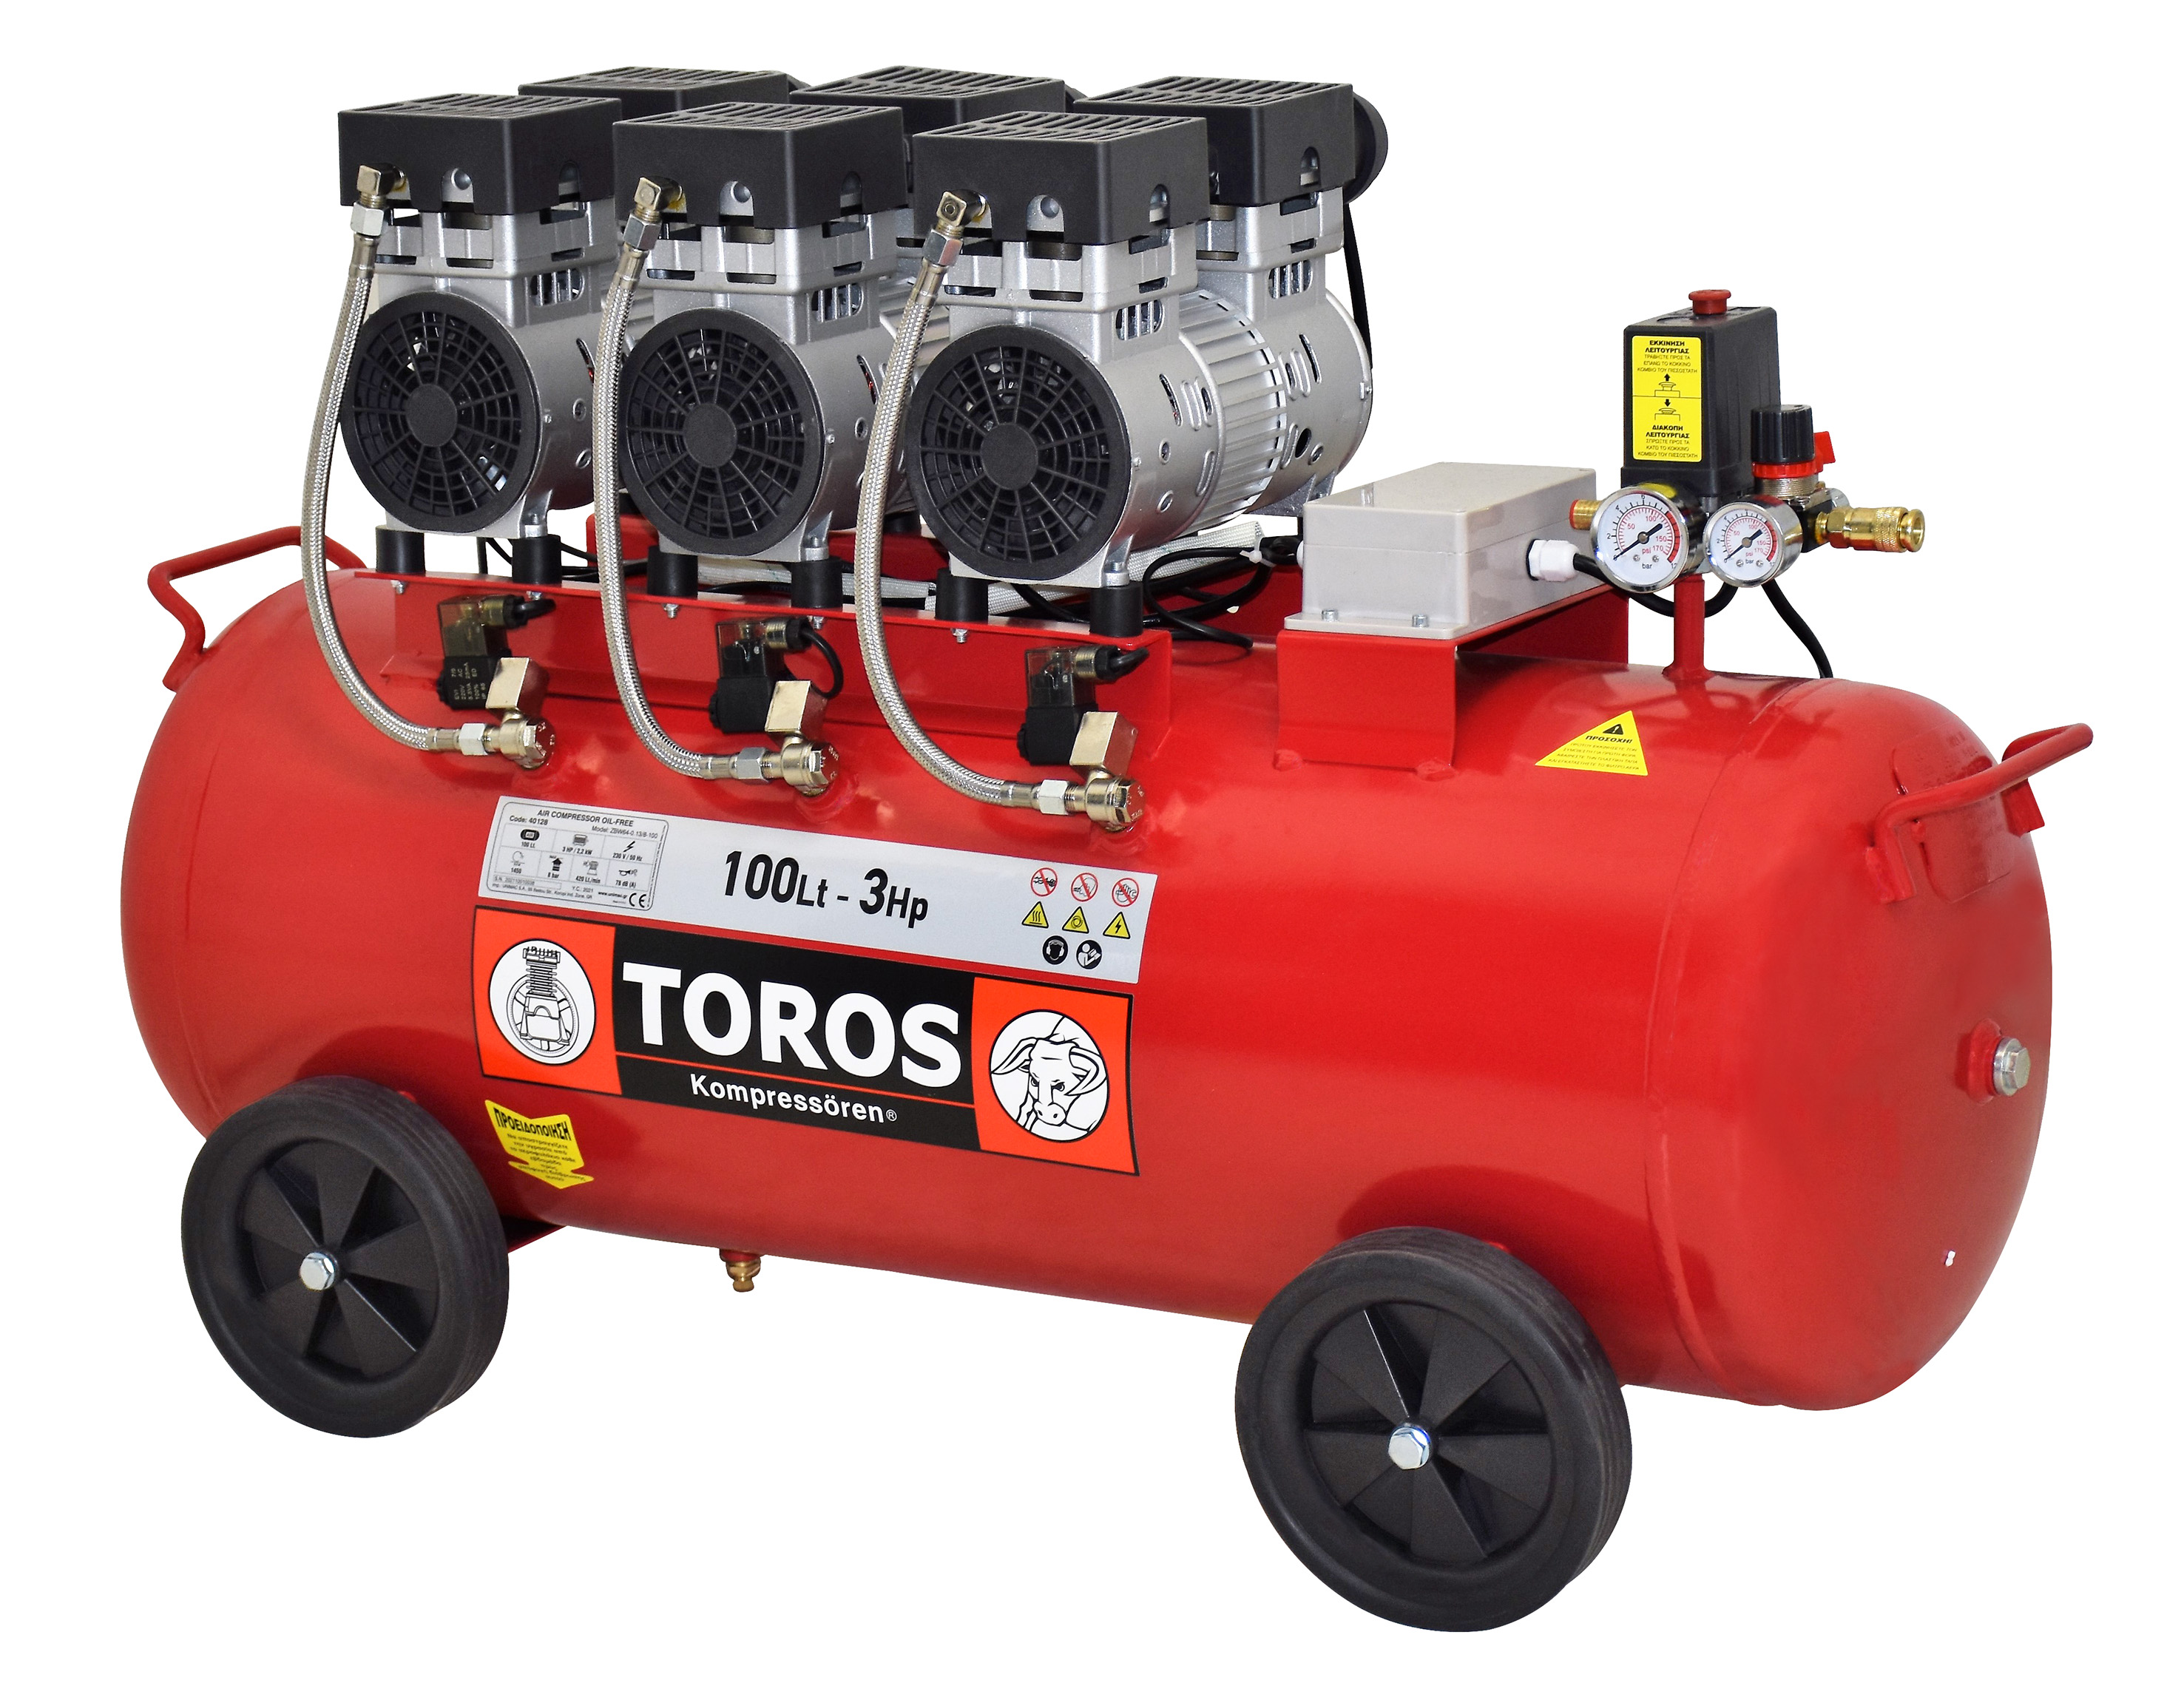 Aircompressor 3HP/100Lt OilFree Toros - 1